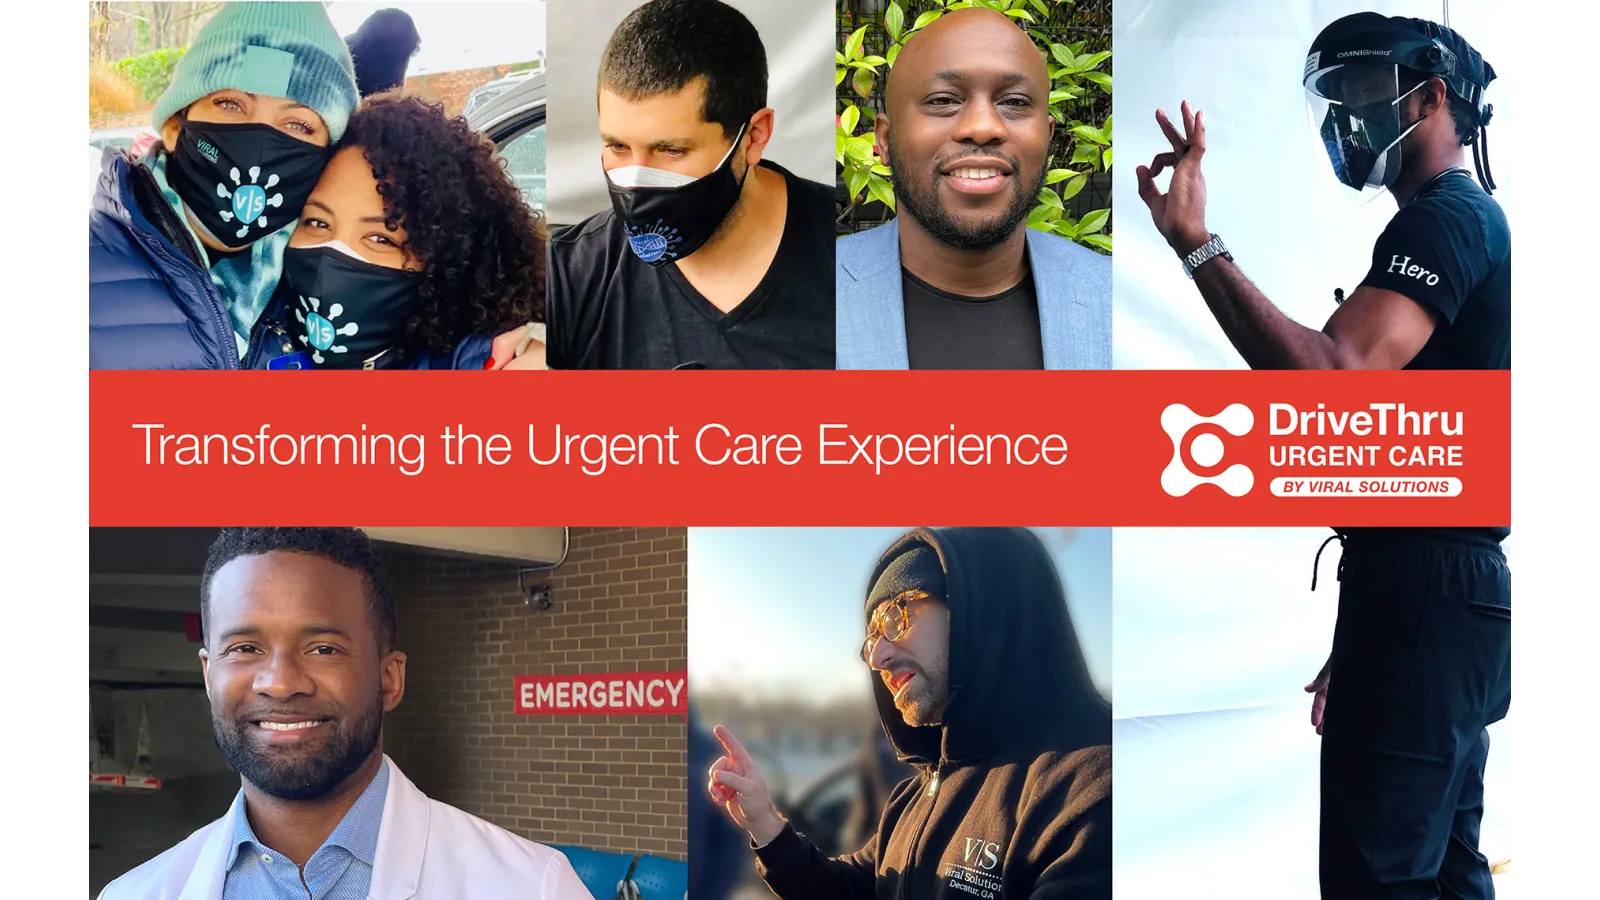 DriveThru Urgent Care: Transforming the Urgent Care Experience